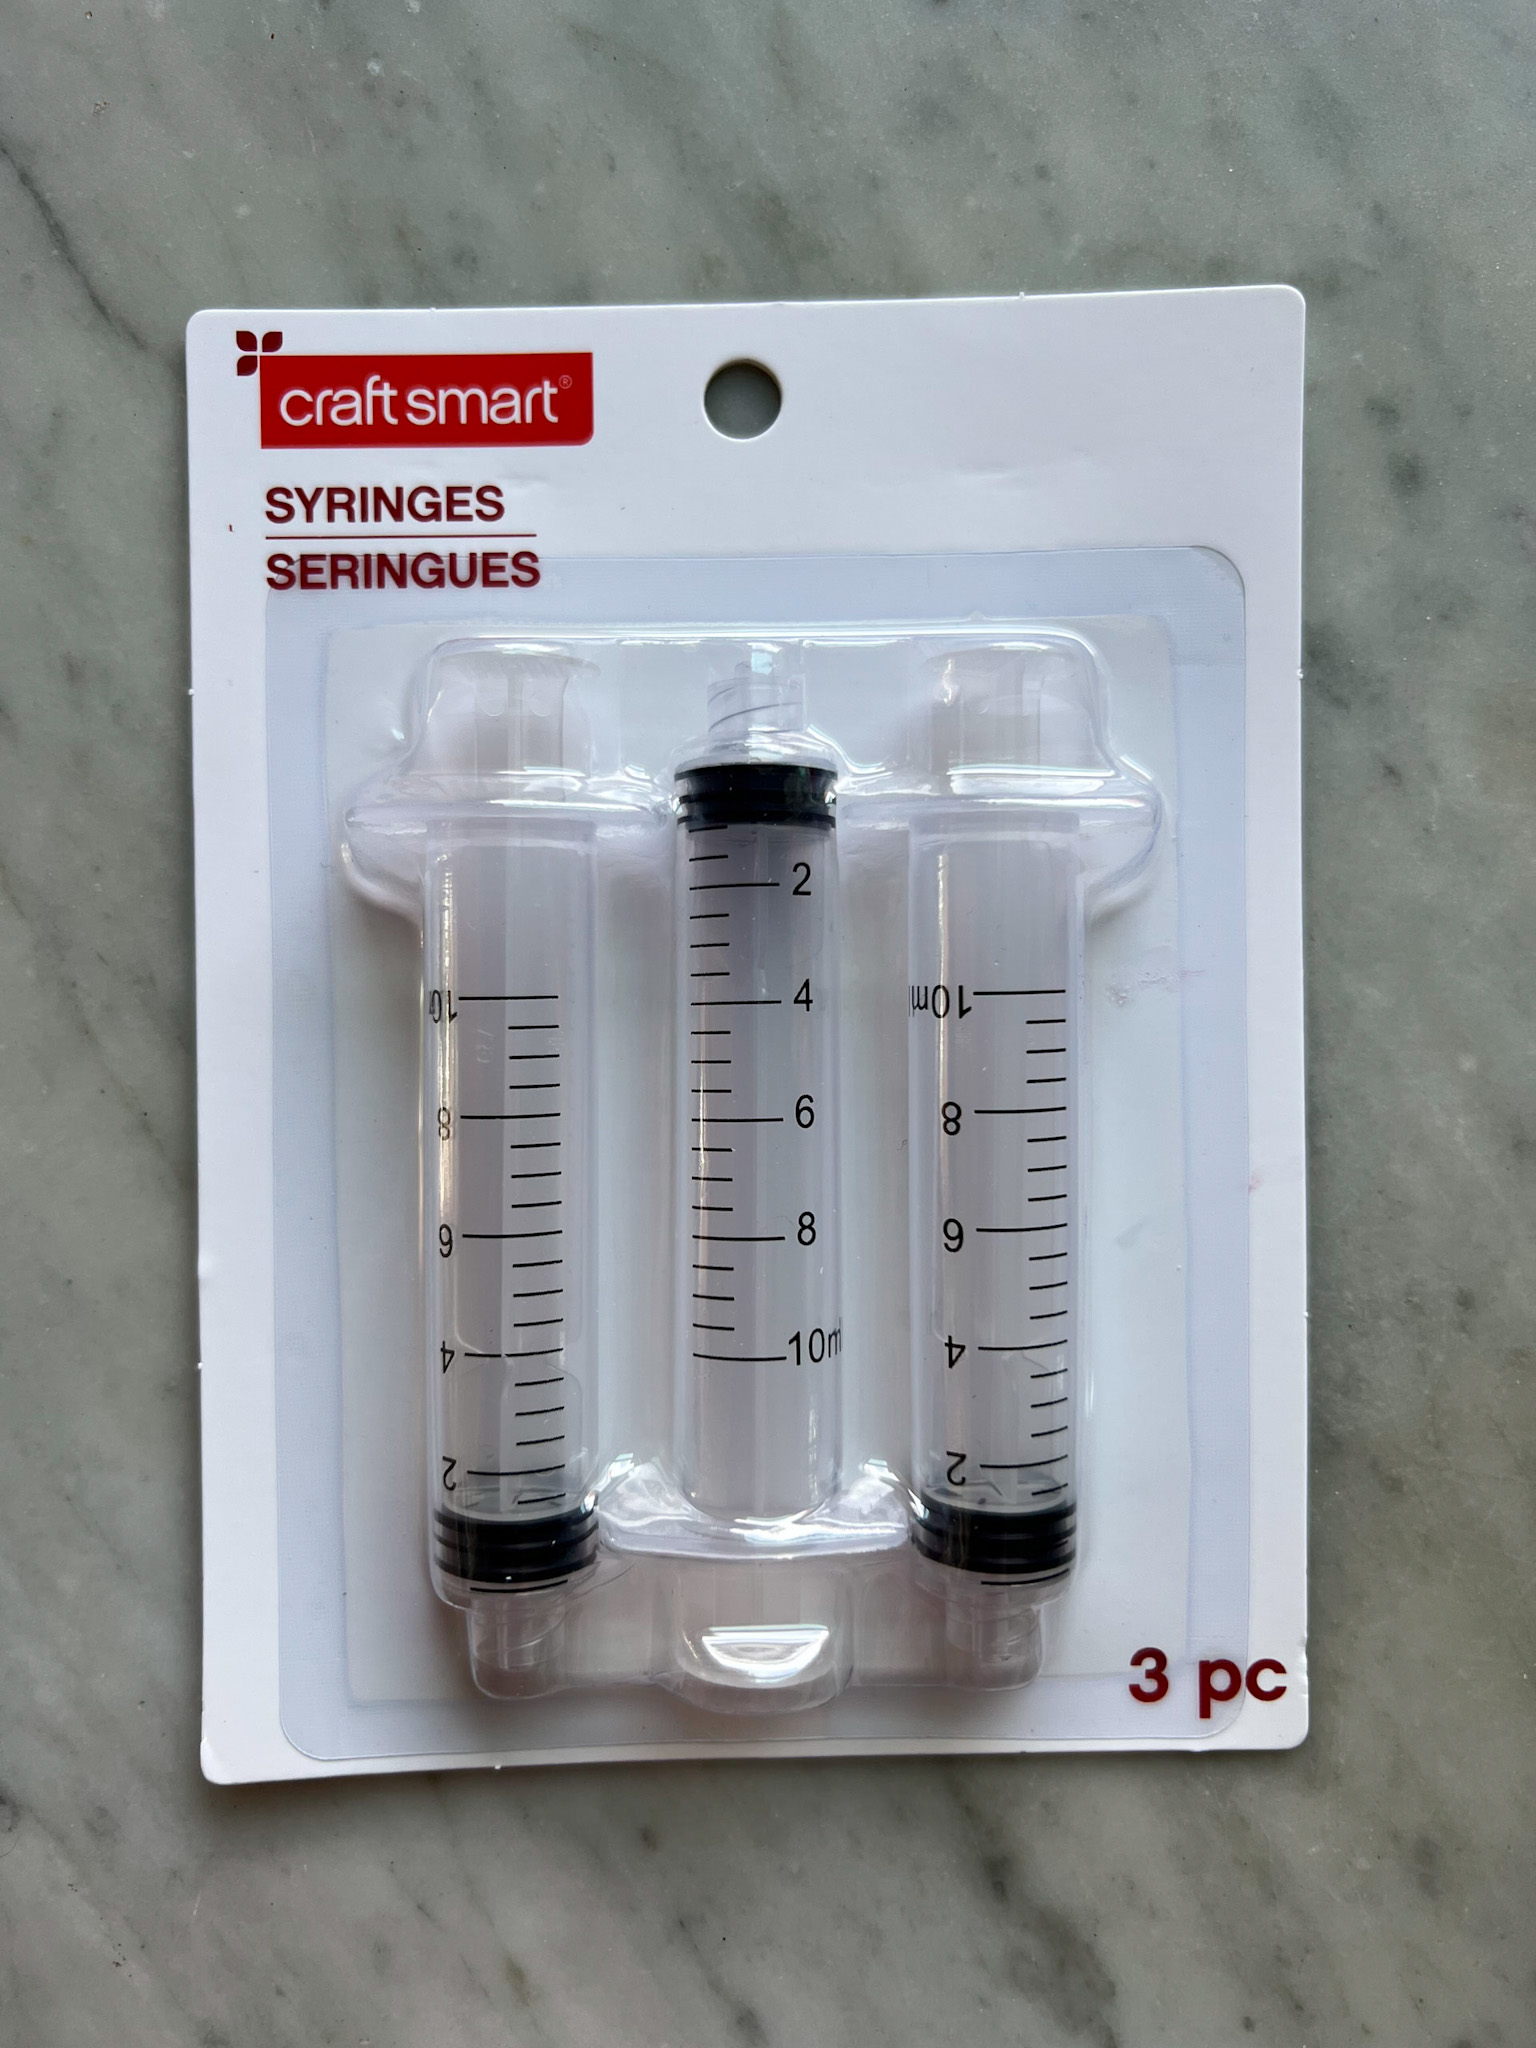 Syringes for Vampire Shots